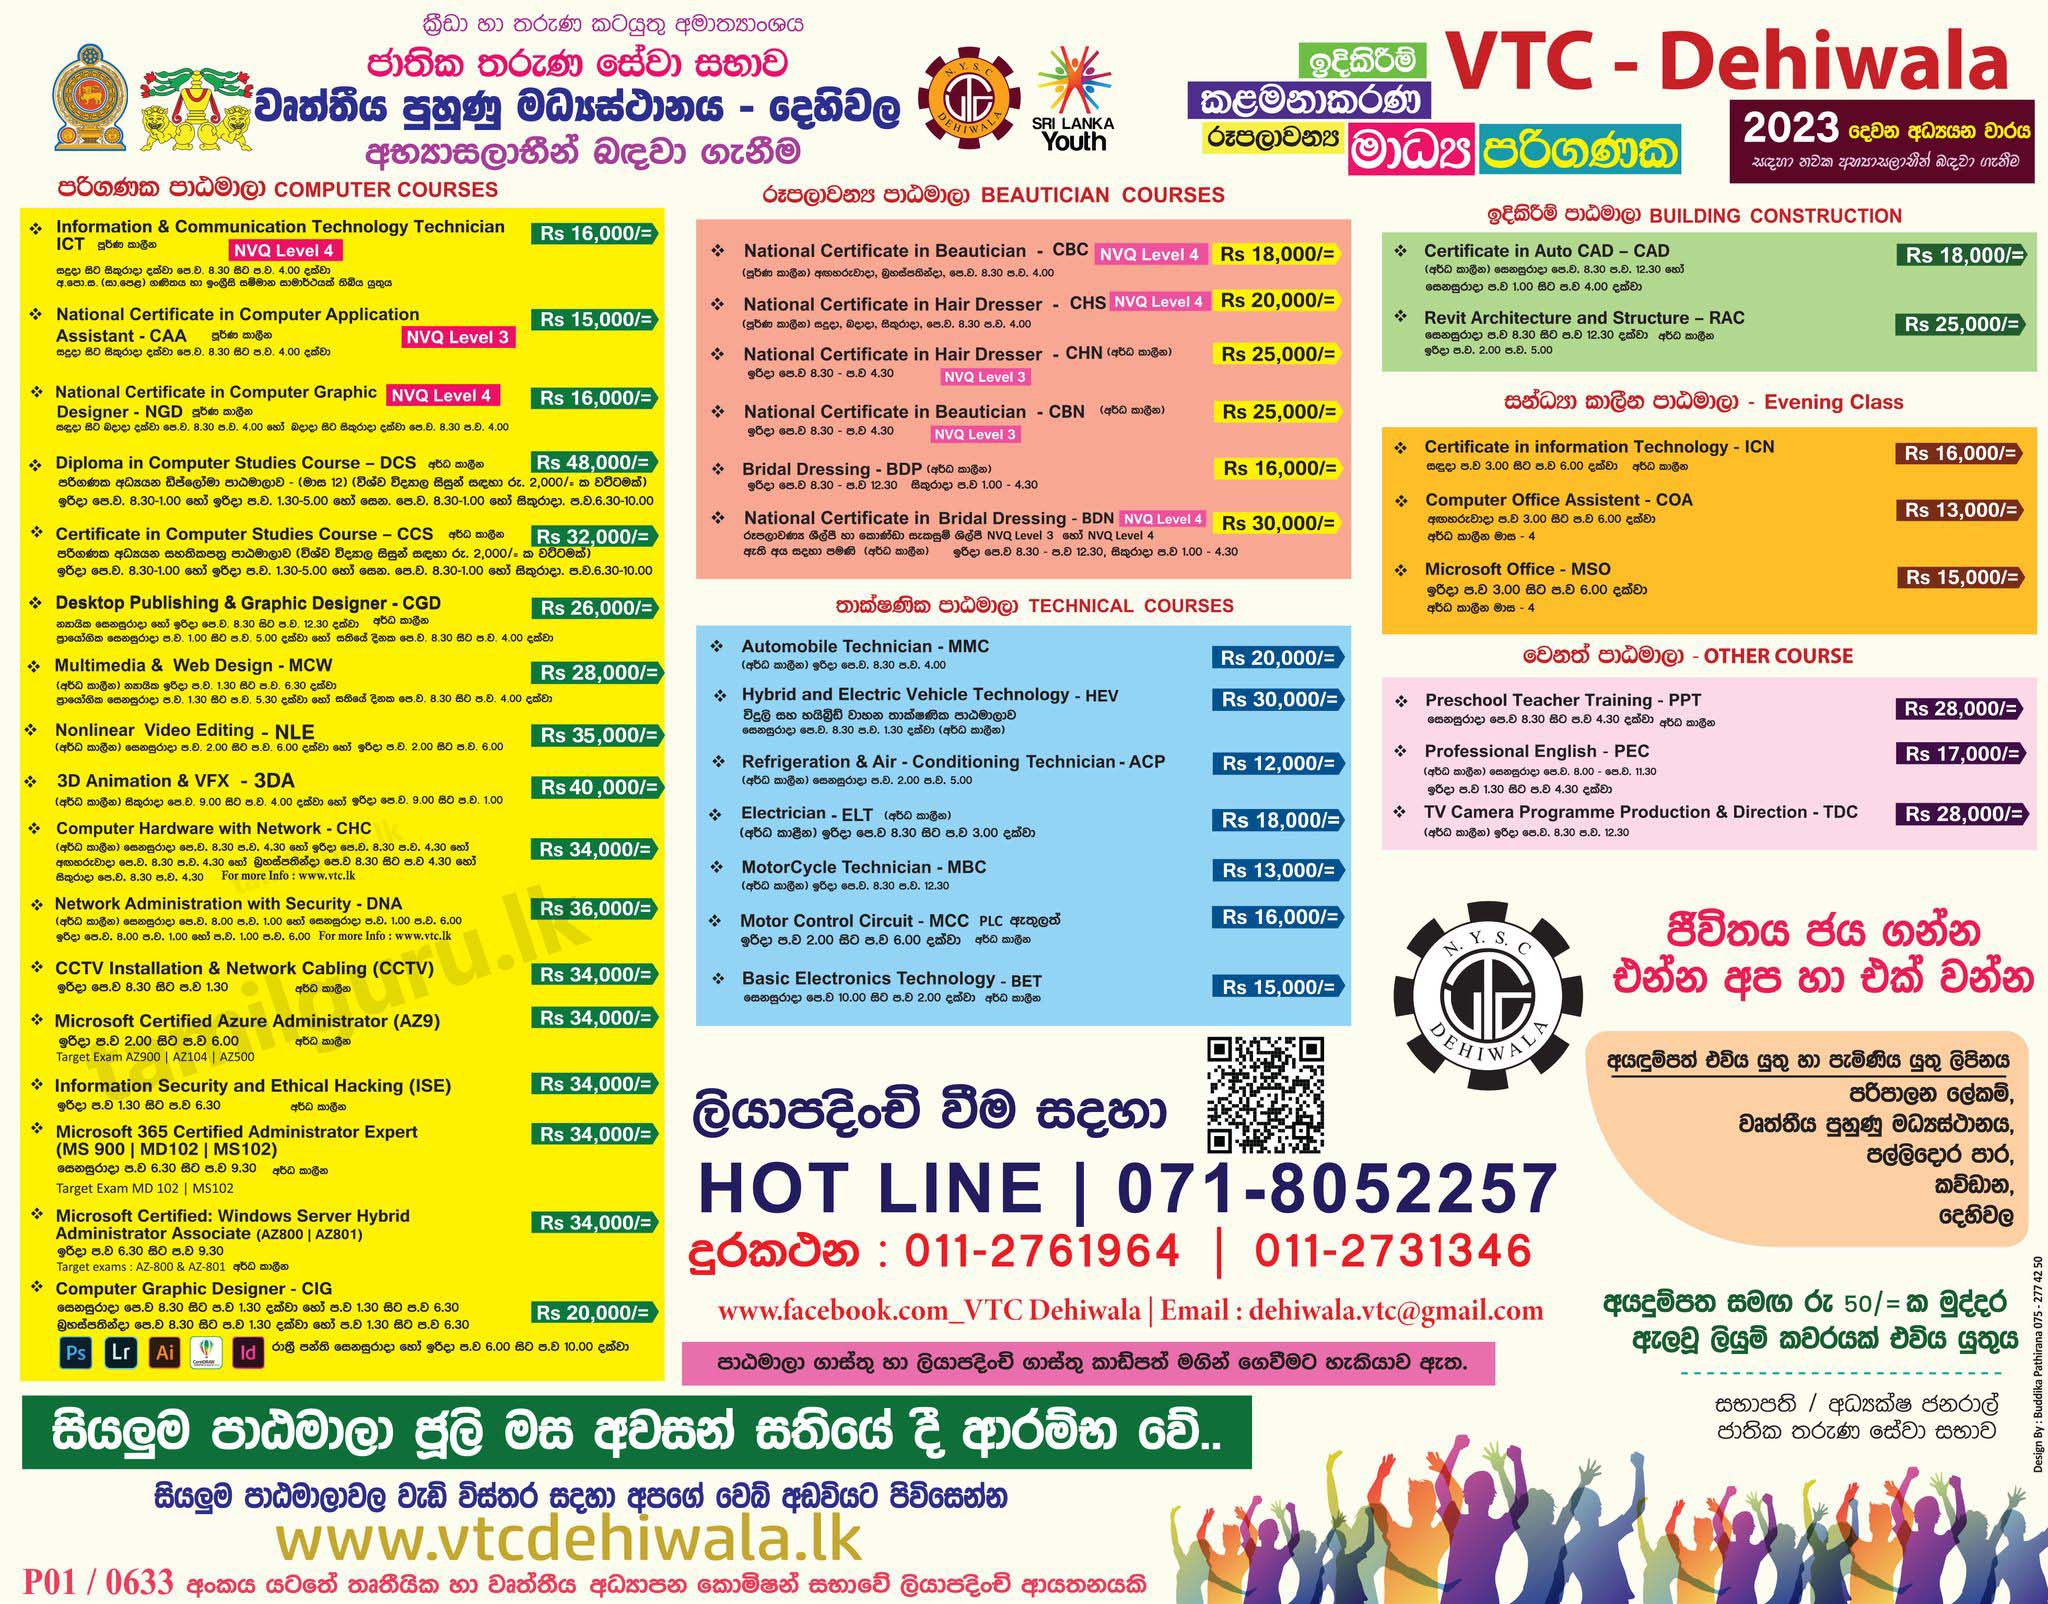 Vocational Training Center (VTC) - Dehiwala (NYSC) Courses Application 2023
